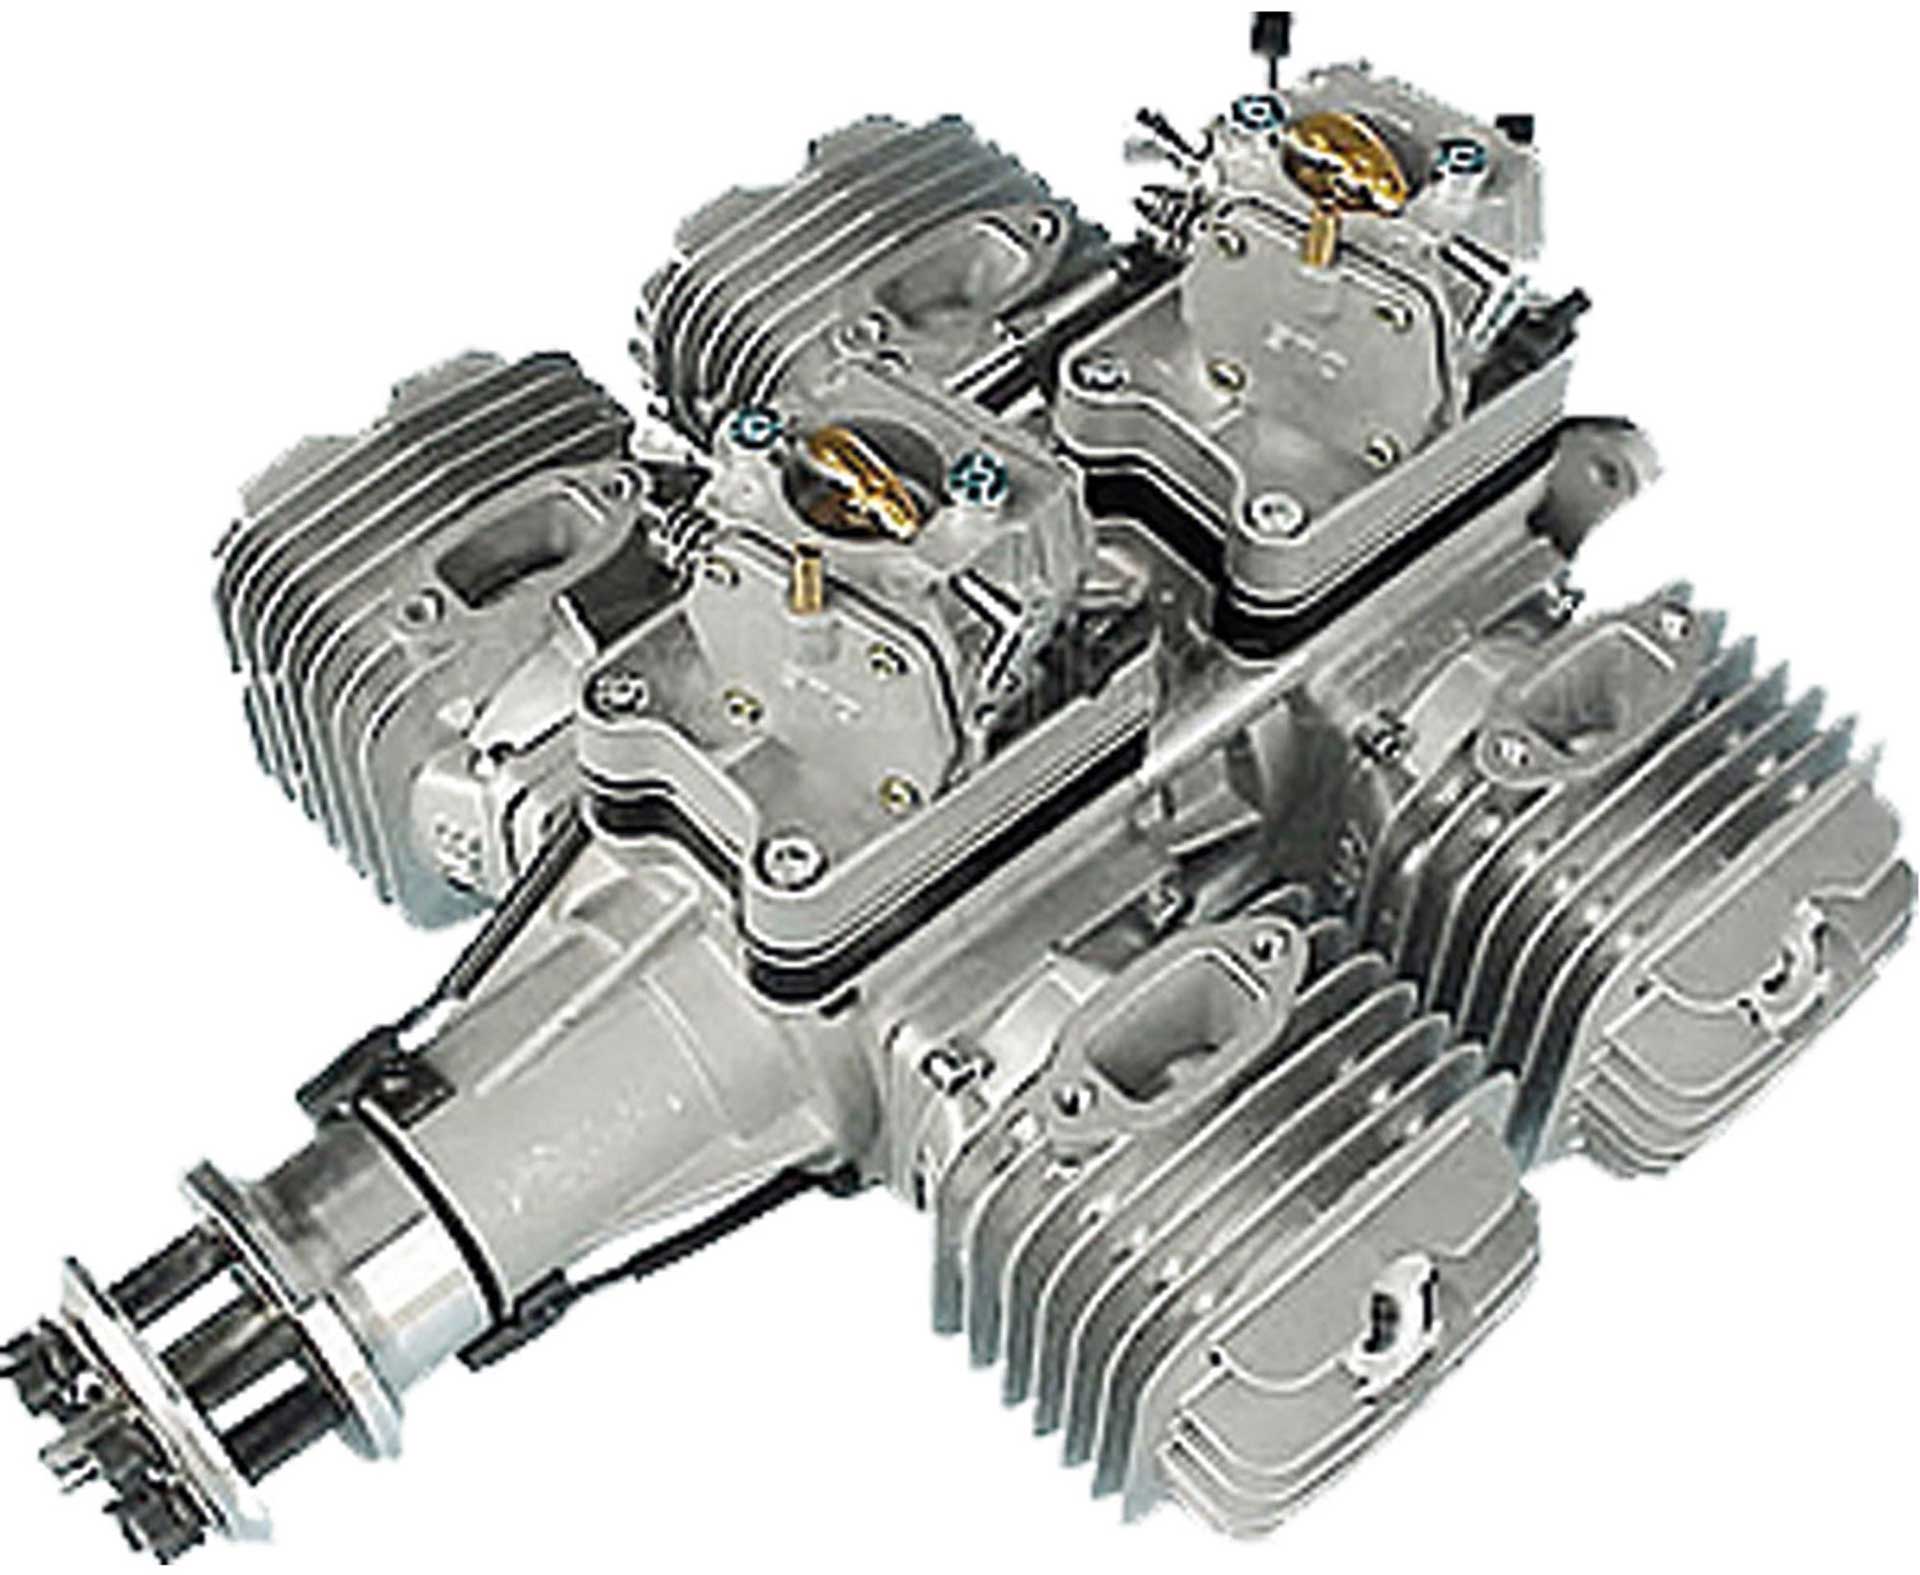 DLE Engines DLE 222 moteur essence 4 cylindres Original avec inspection